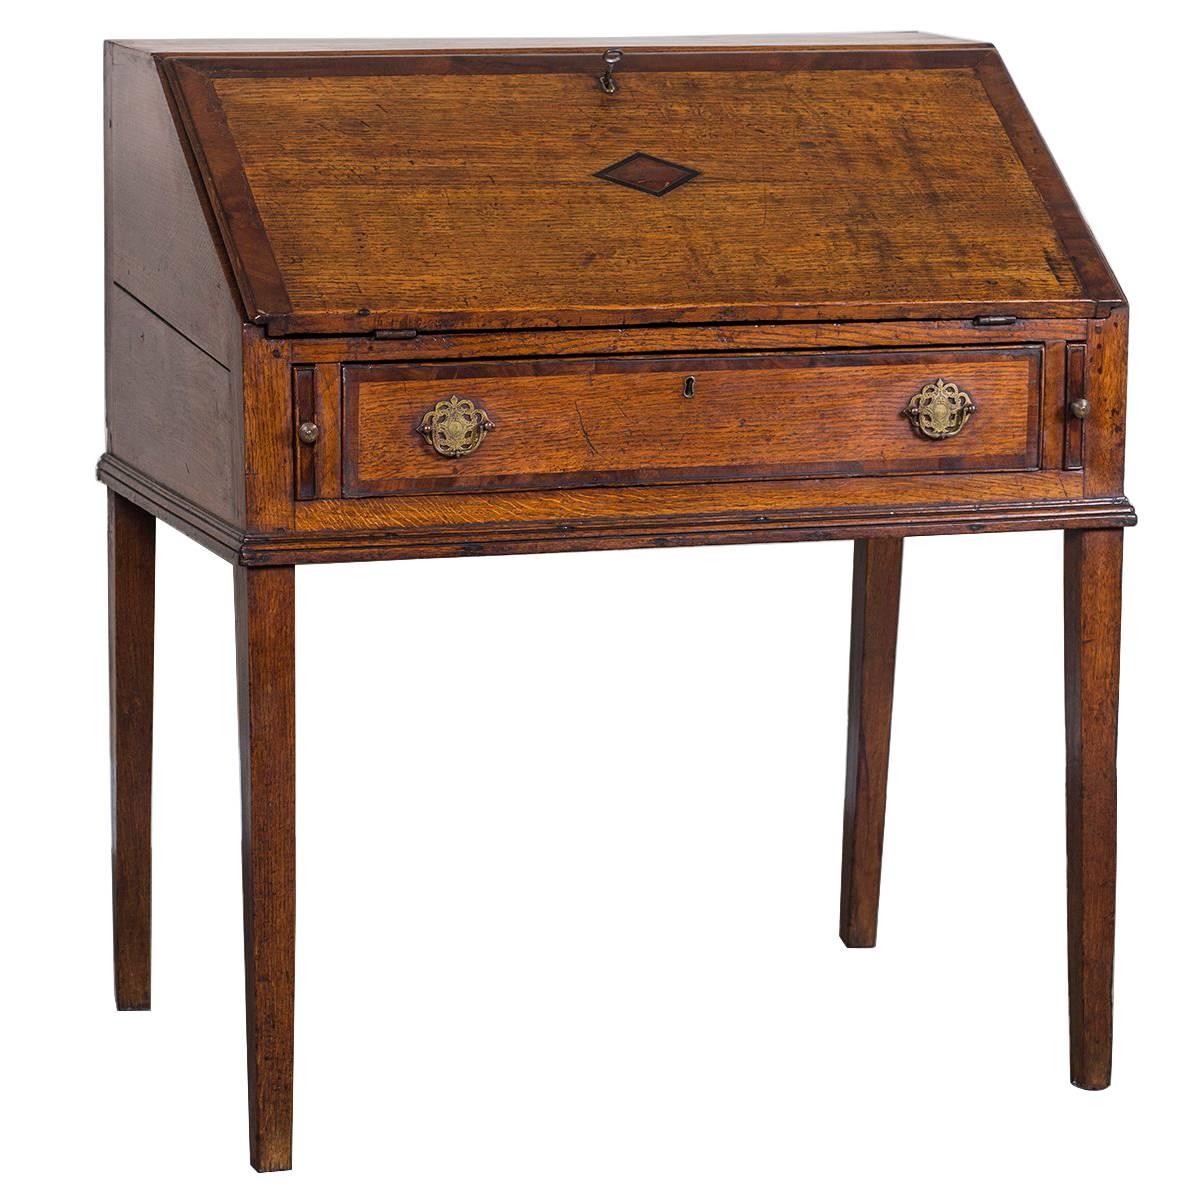 English George III Period Oak Slant Front Desk, circa 1760